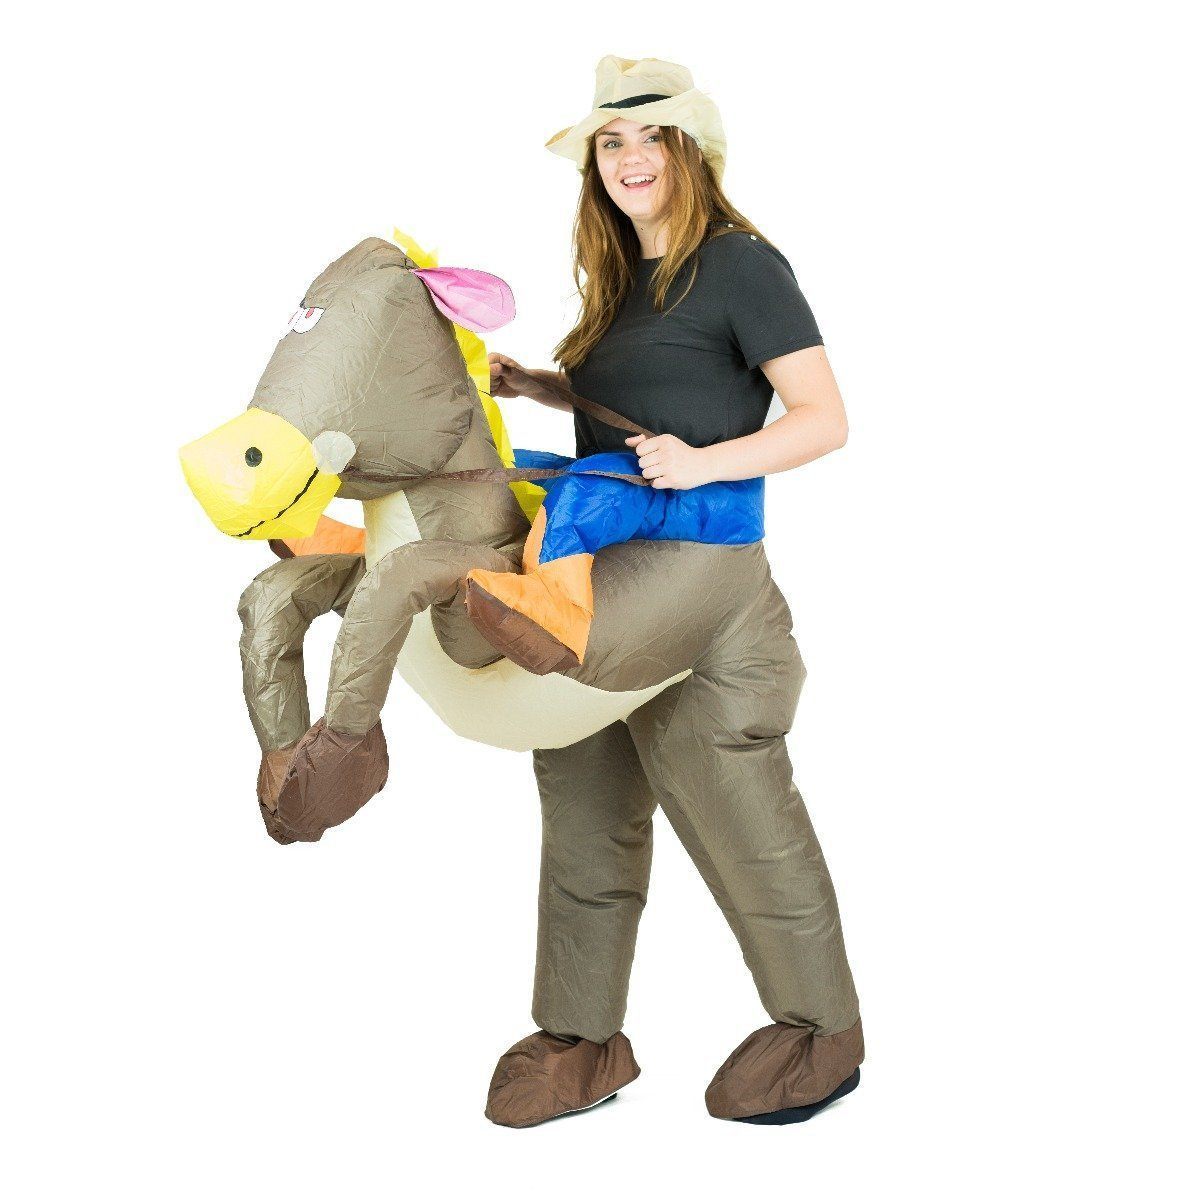 Fancy Dress - Inflatable Cowboy Costume